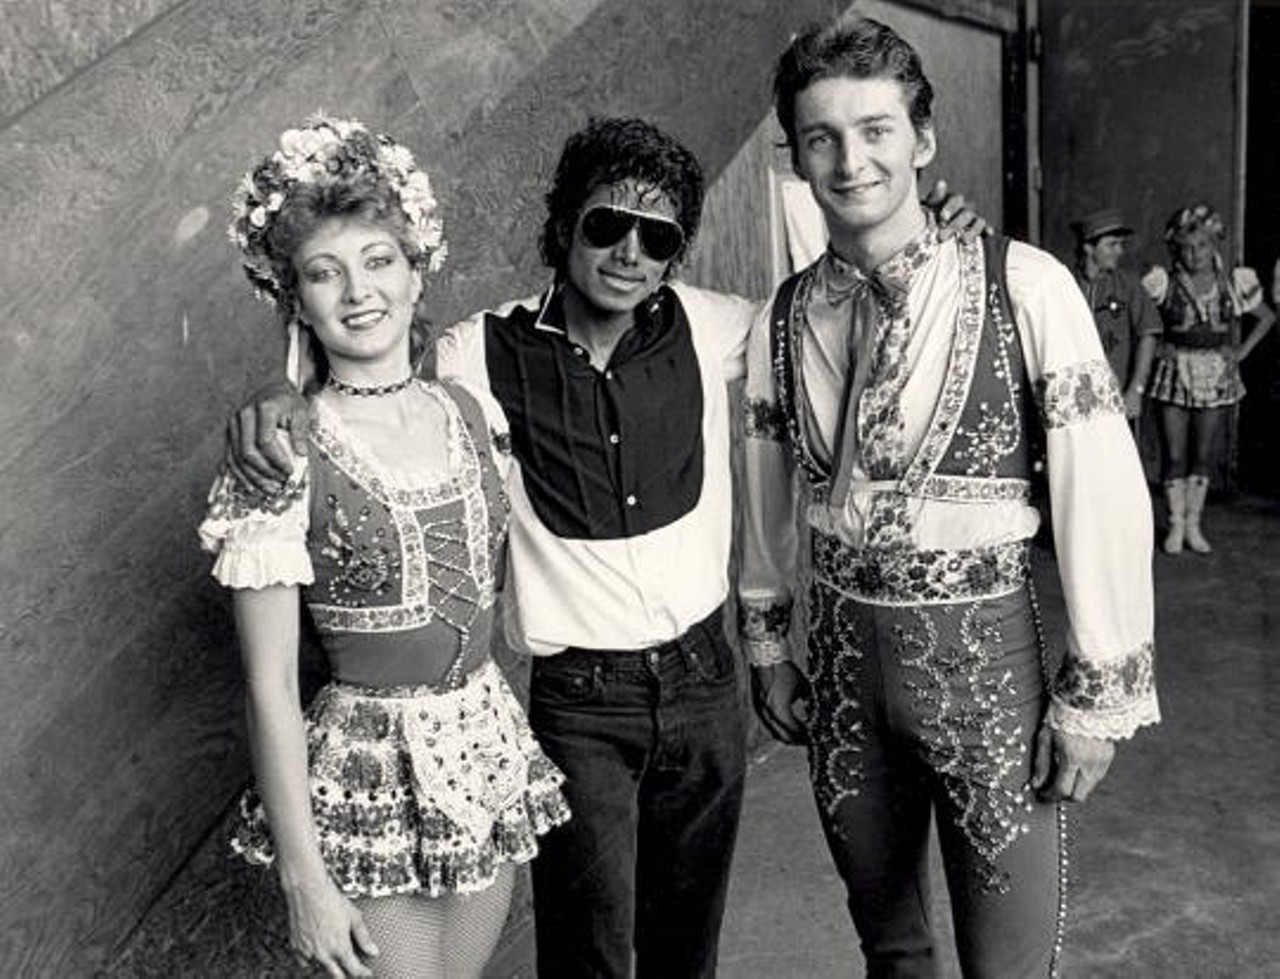 Michael Jackson was said to have loved Circus World (via circus4youth.org)